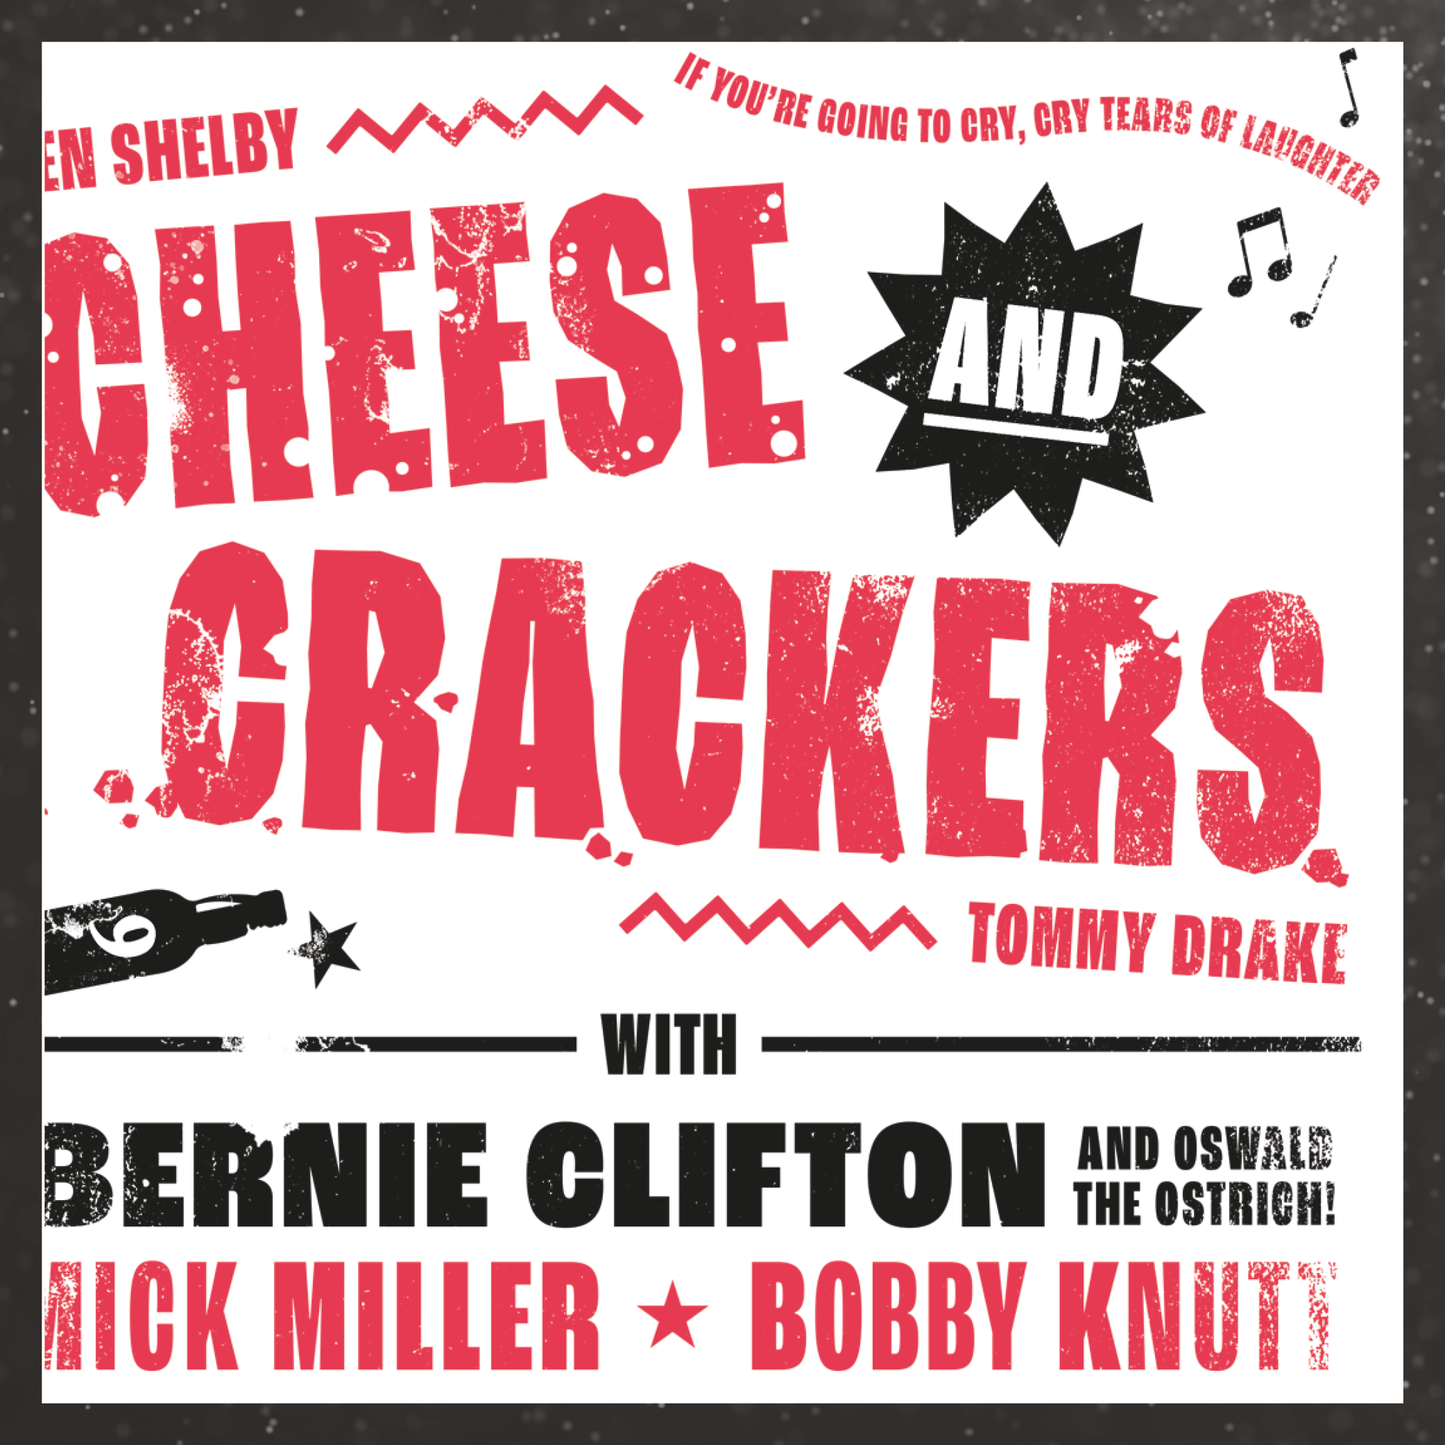 Cheese & Crackers T-Shirt